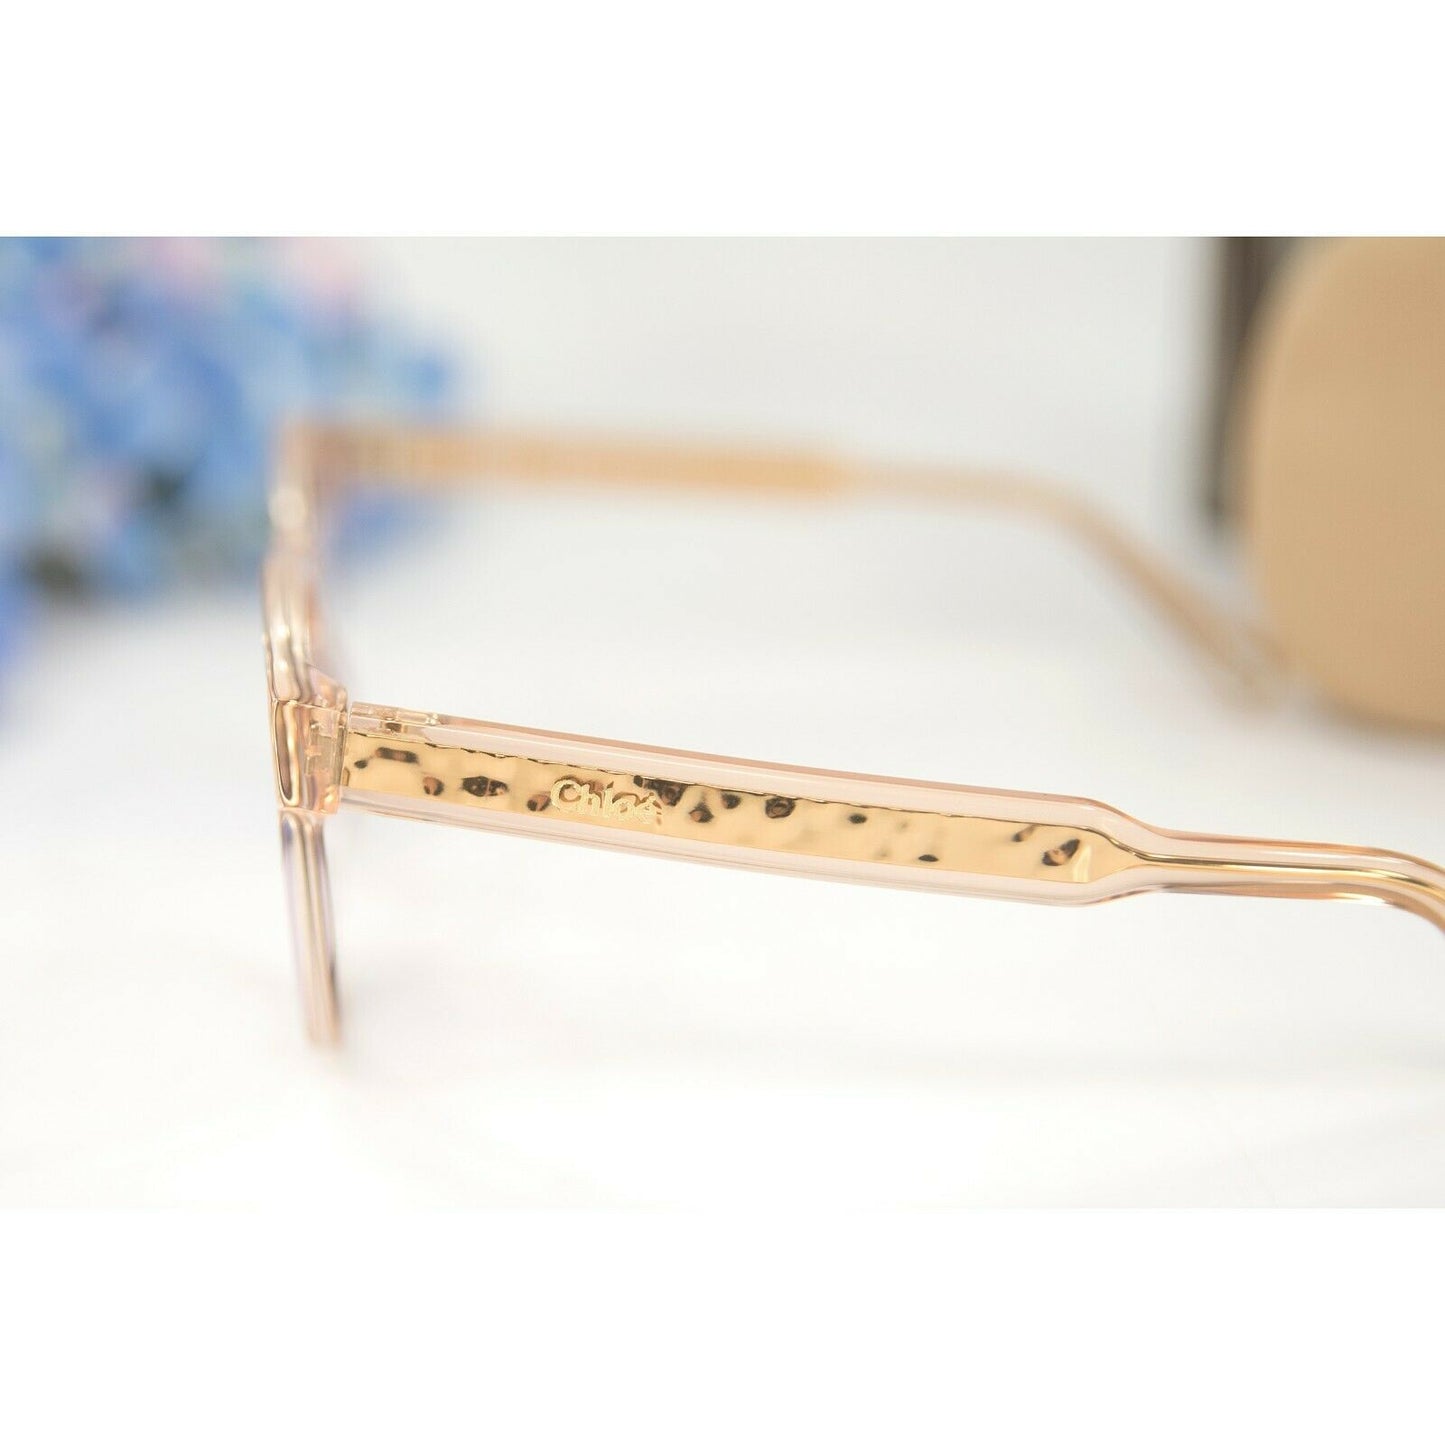 Chloe CE753S Peach Gold Gradient Purple Acrylic Metal Logo Sunglasses NWT Case